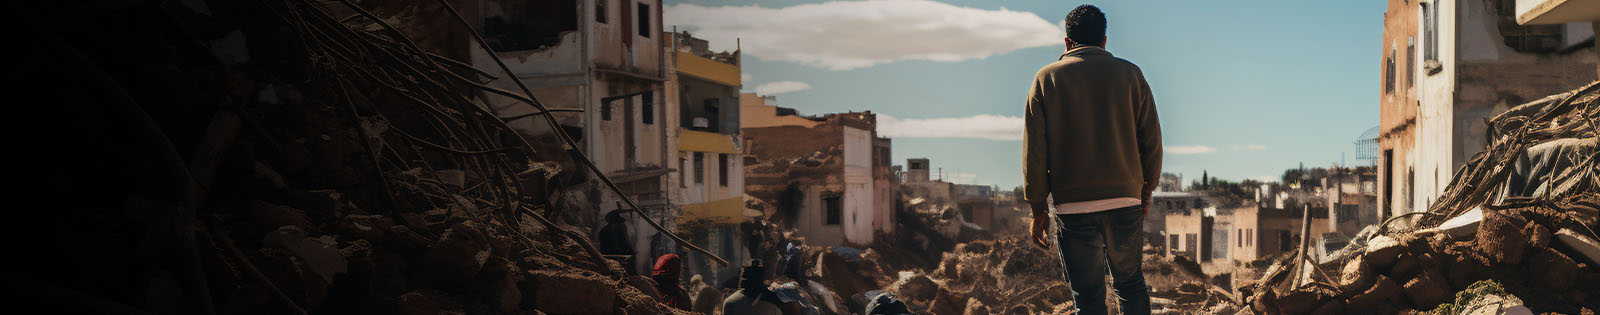 Morocco Earthquake: People on the streets after earthquake.